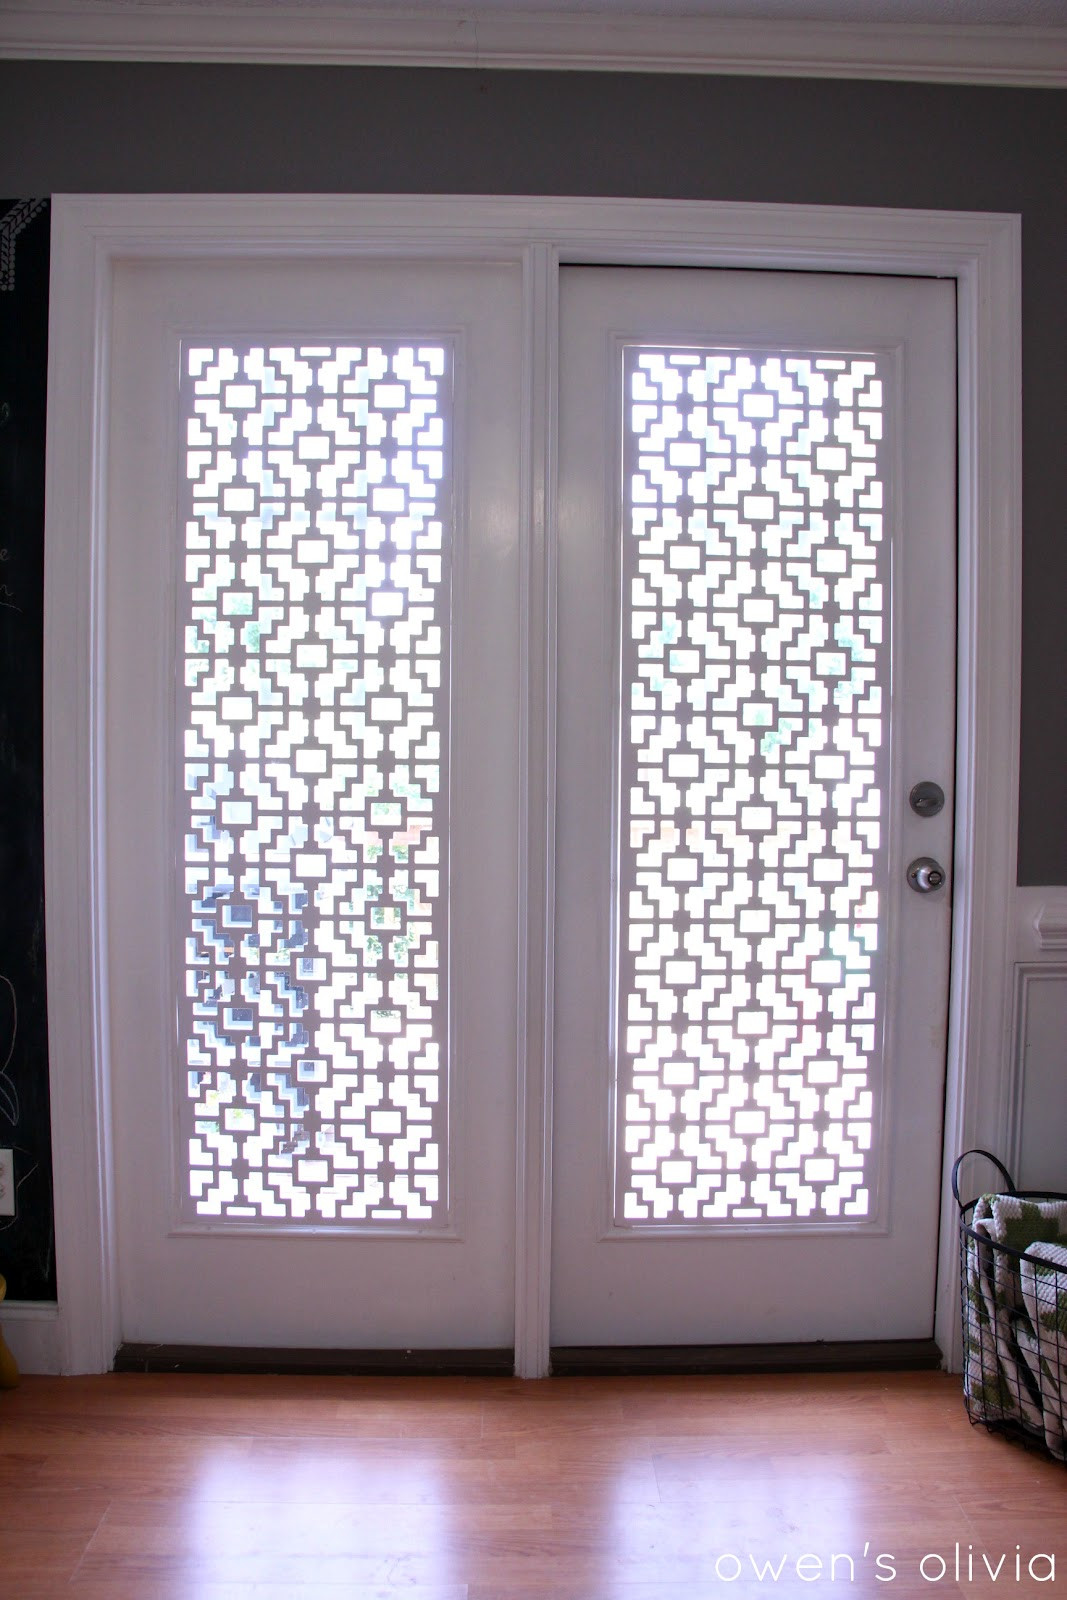 Best ideas about Patio Door Window Treatments
. Save or Pin owen s olivia Custom Window Treatments Using PVC Now.